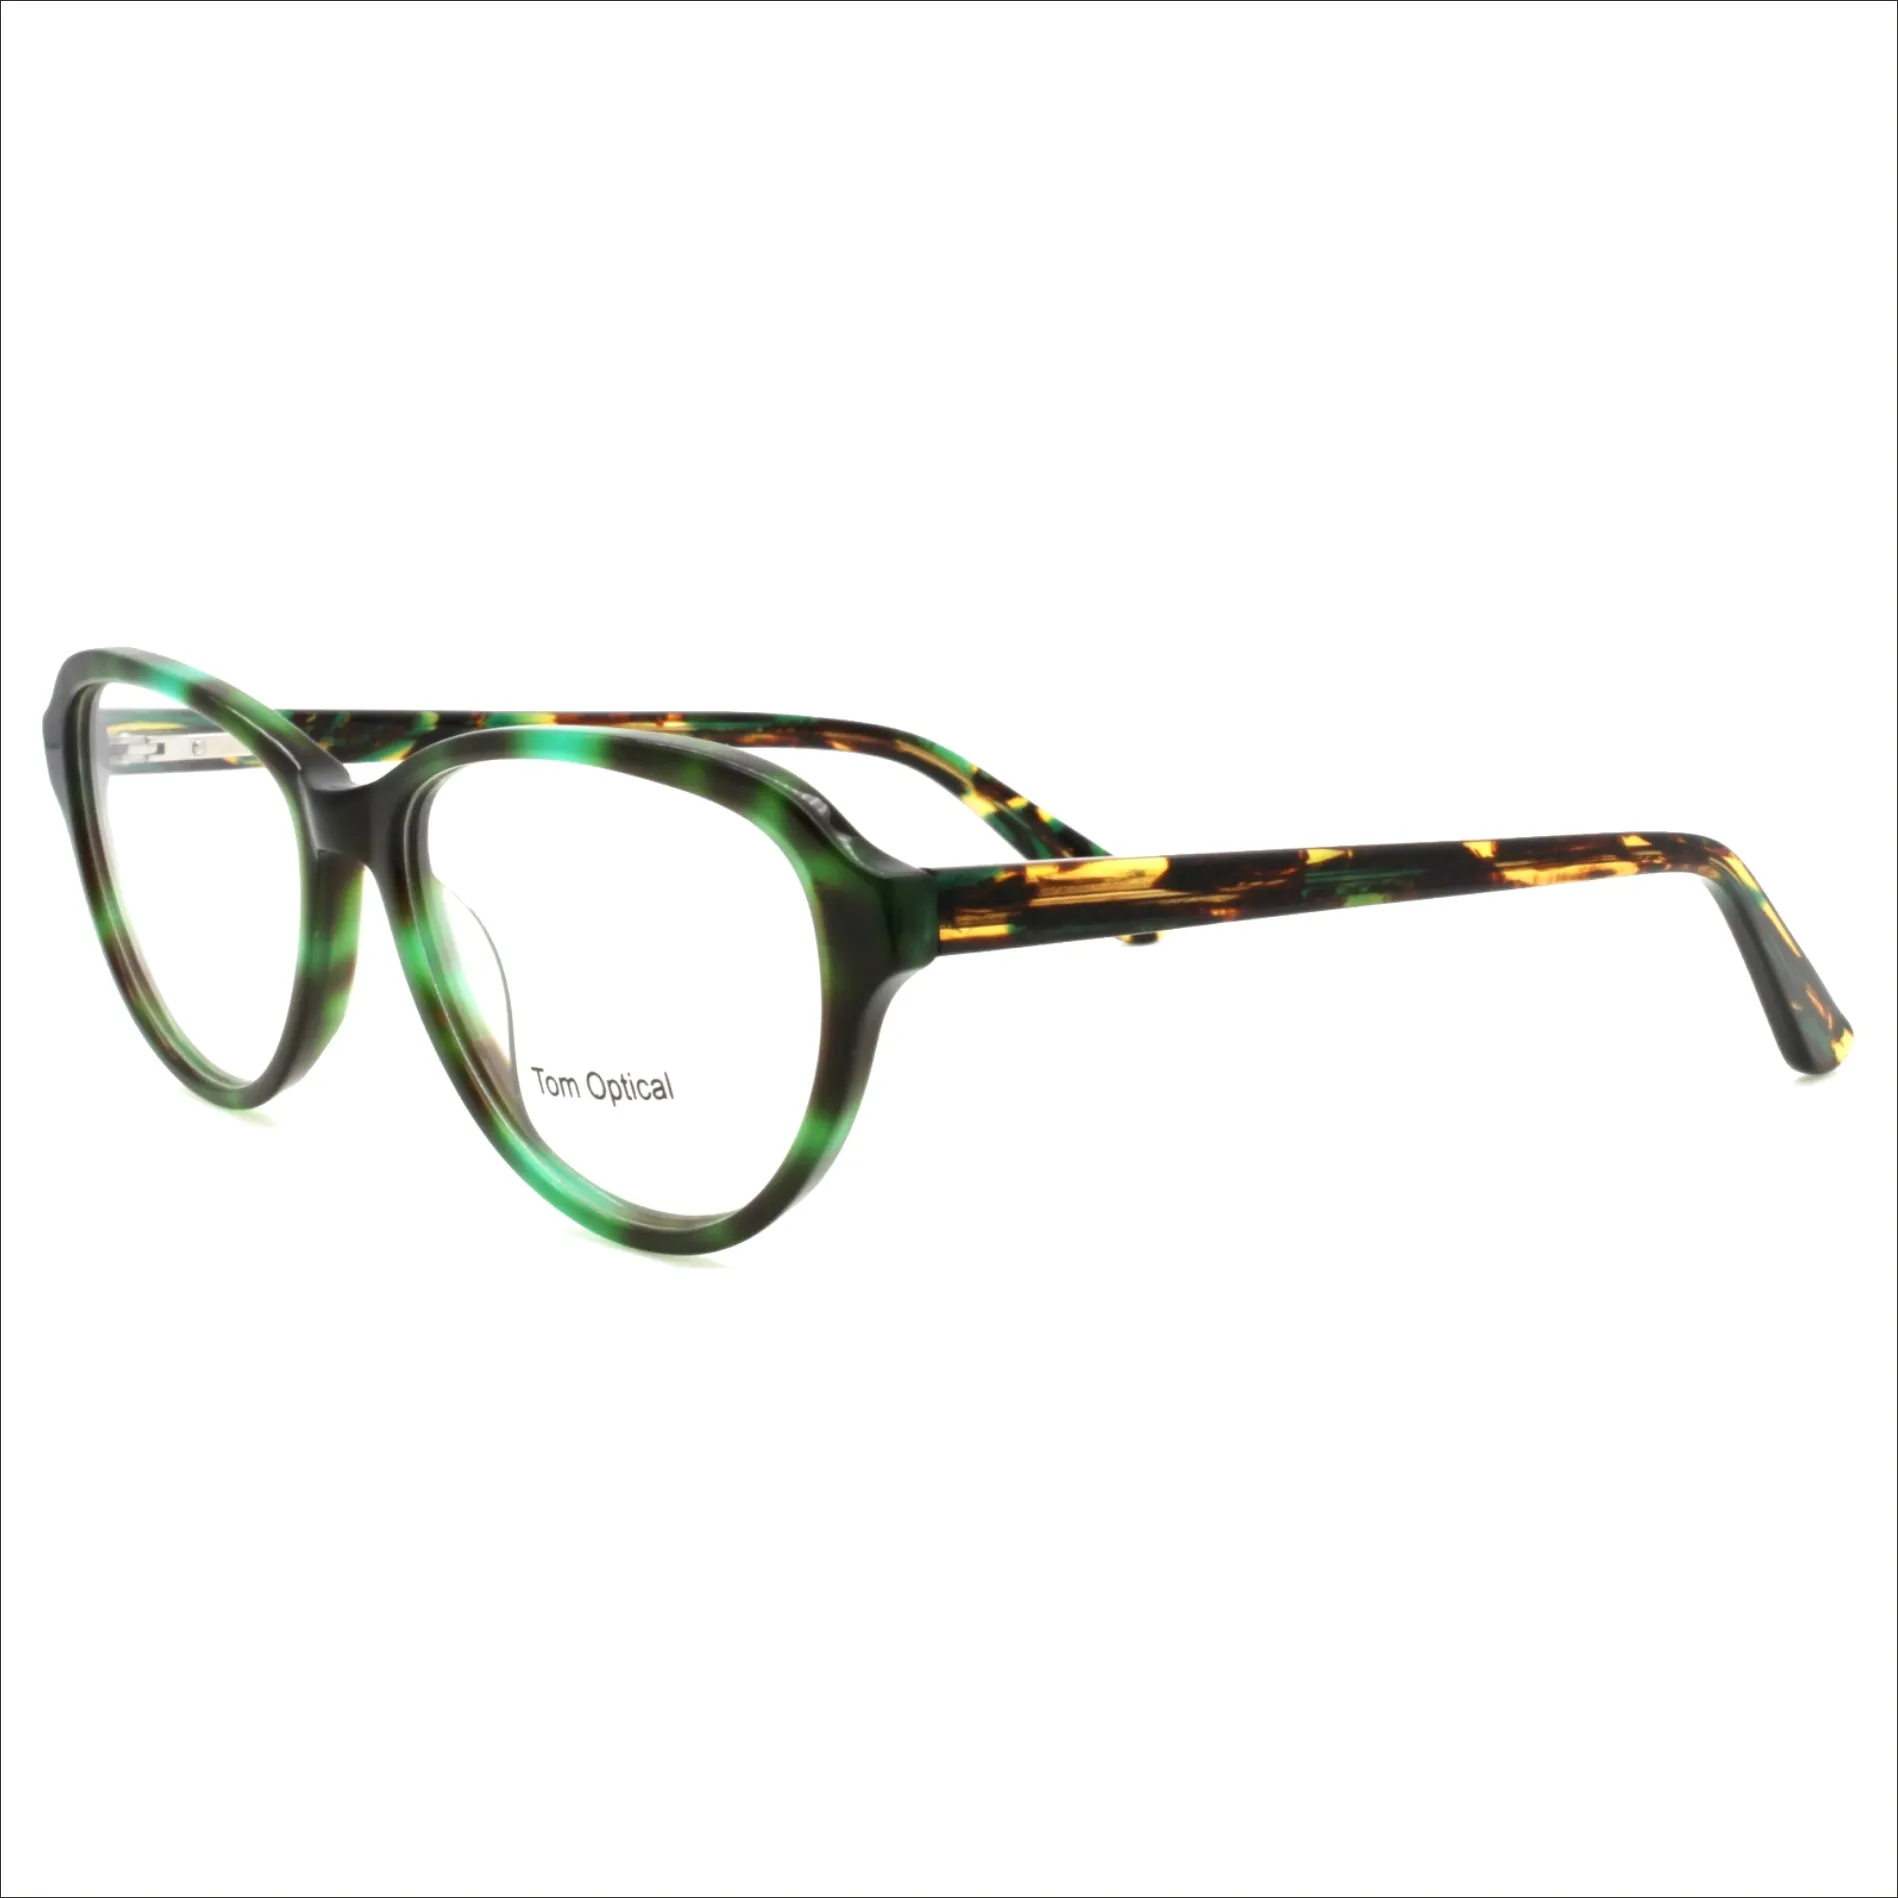 High-end eye glasses acetate optical frame italy design acetate frames eyeglasses ready stock wholesale